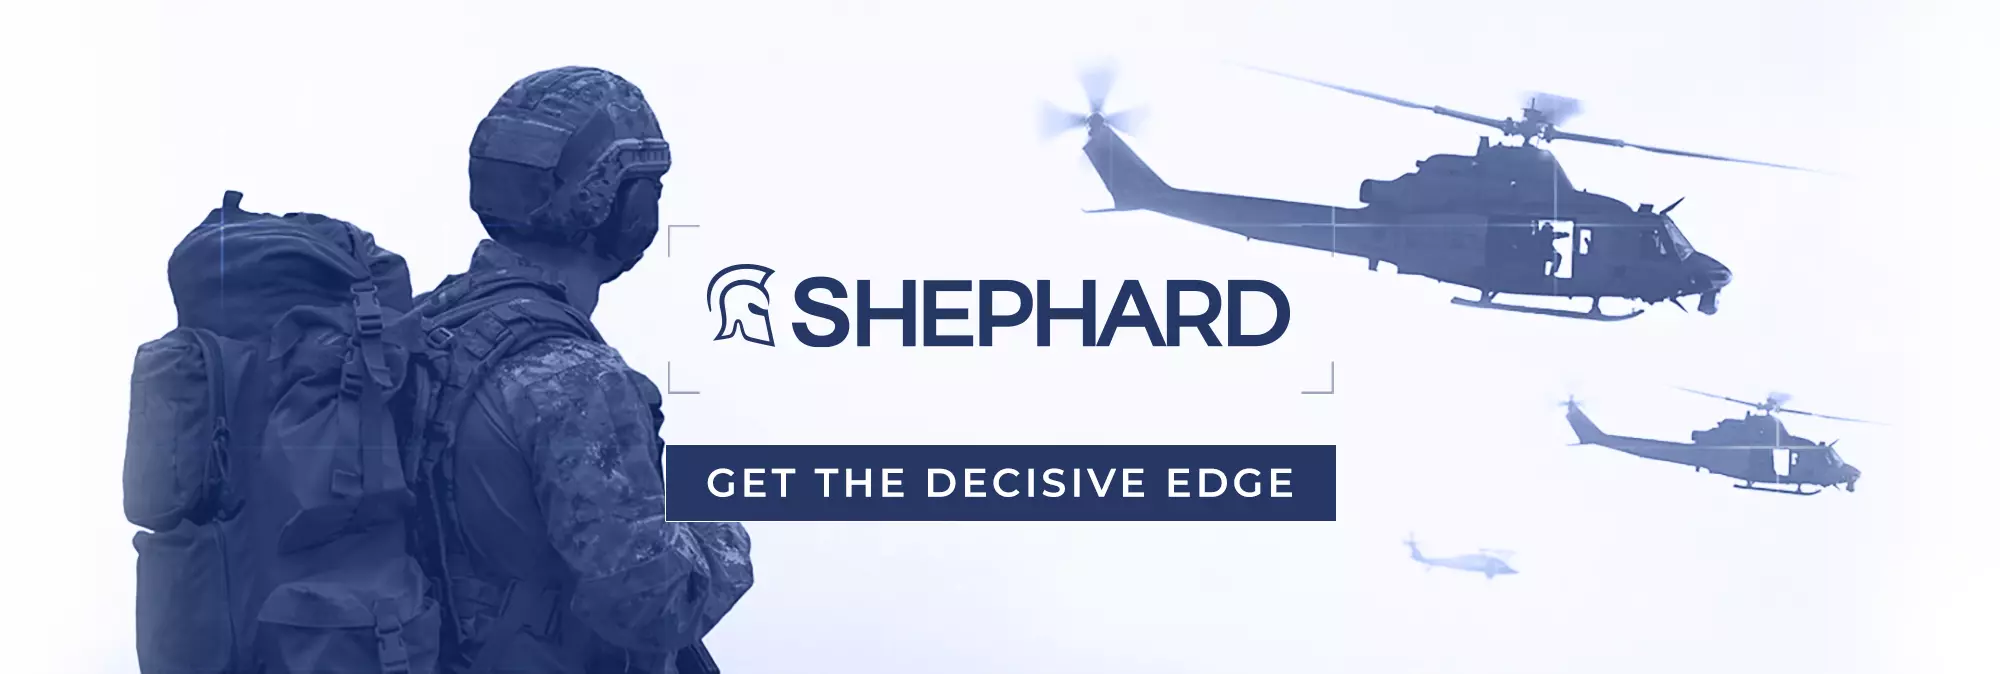 Shephard - Get the decisive edge